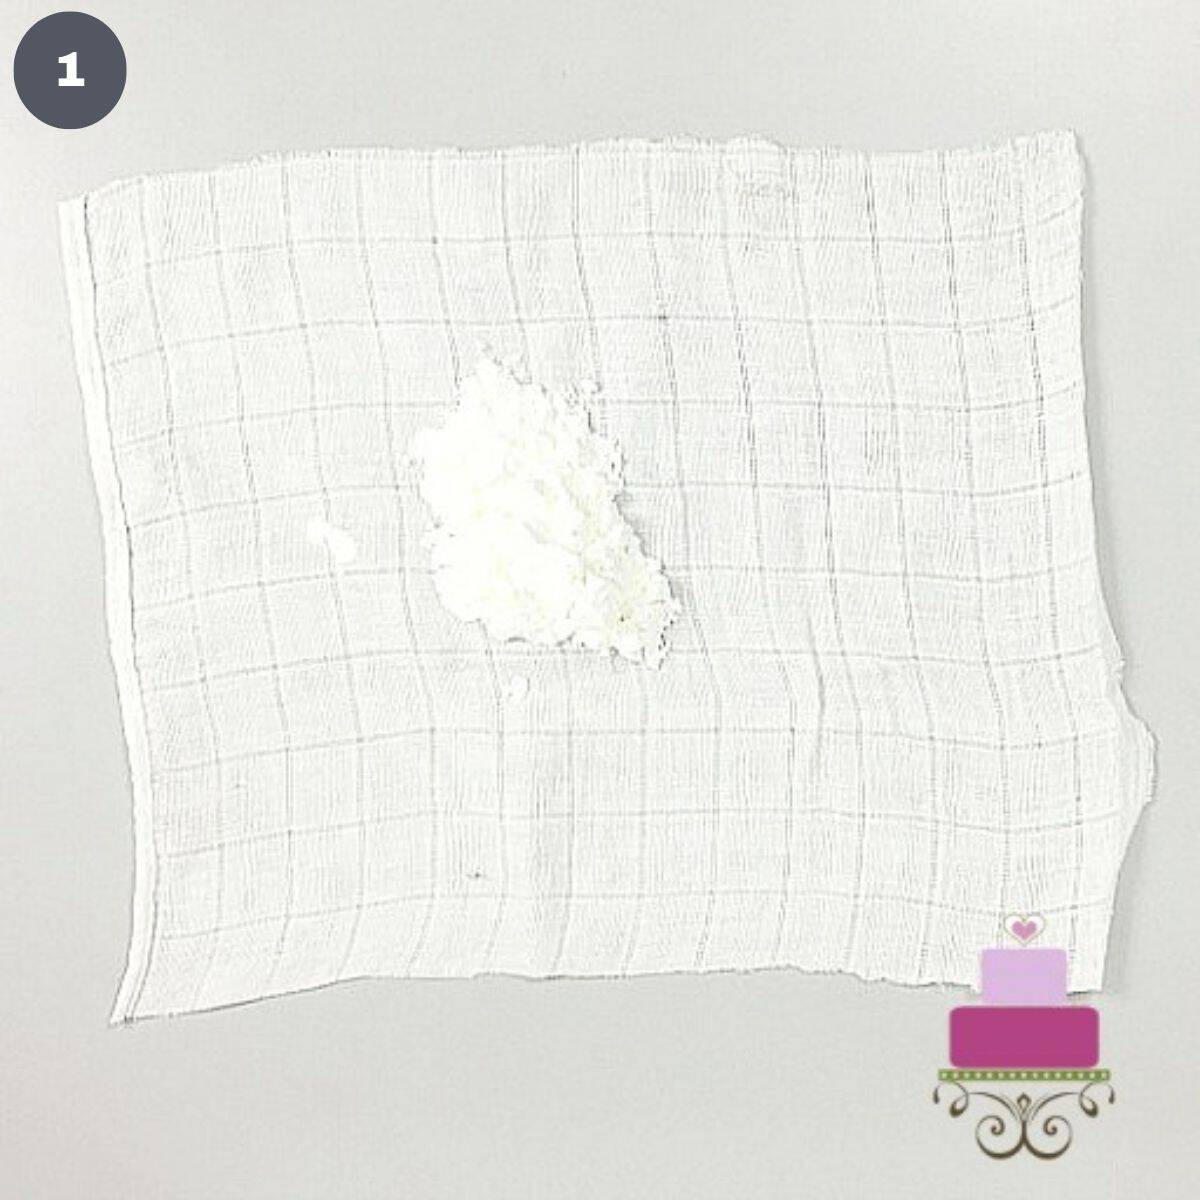 Powdered sugar in the center of a square white cloth.